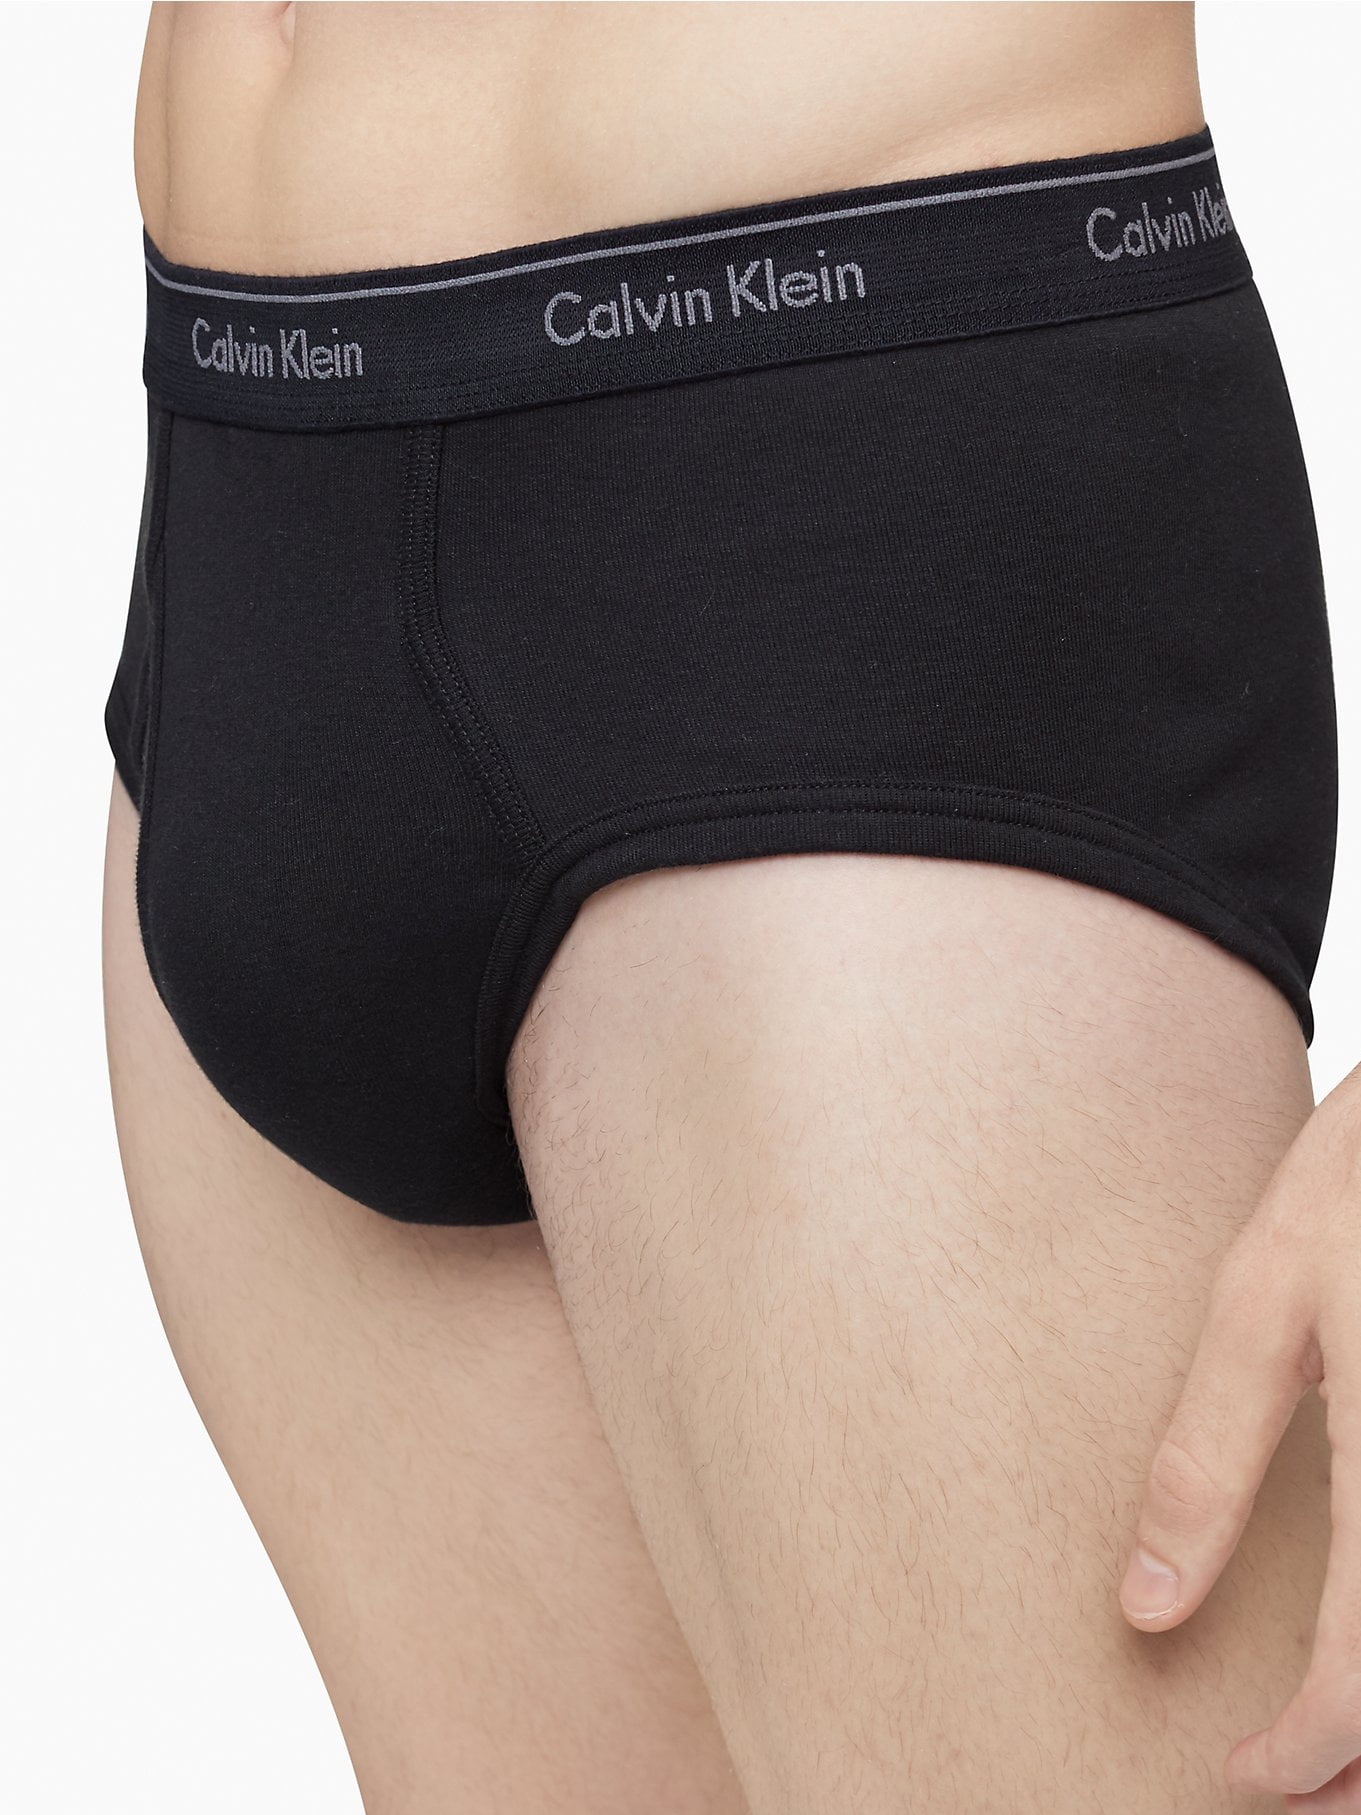 Calvin Klein Men's Cotton Classics 4-Pack Briefs, White, Small